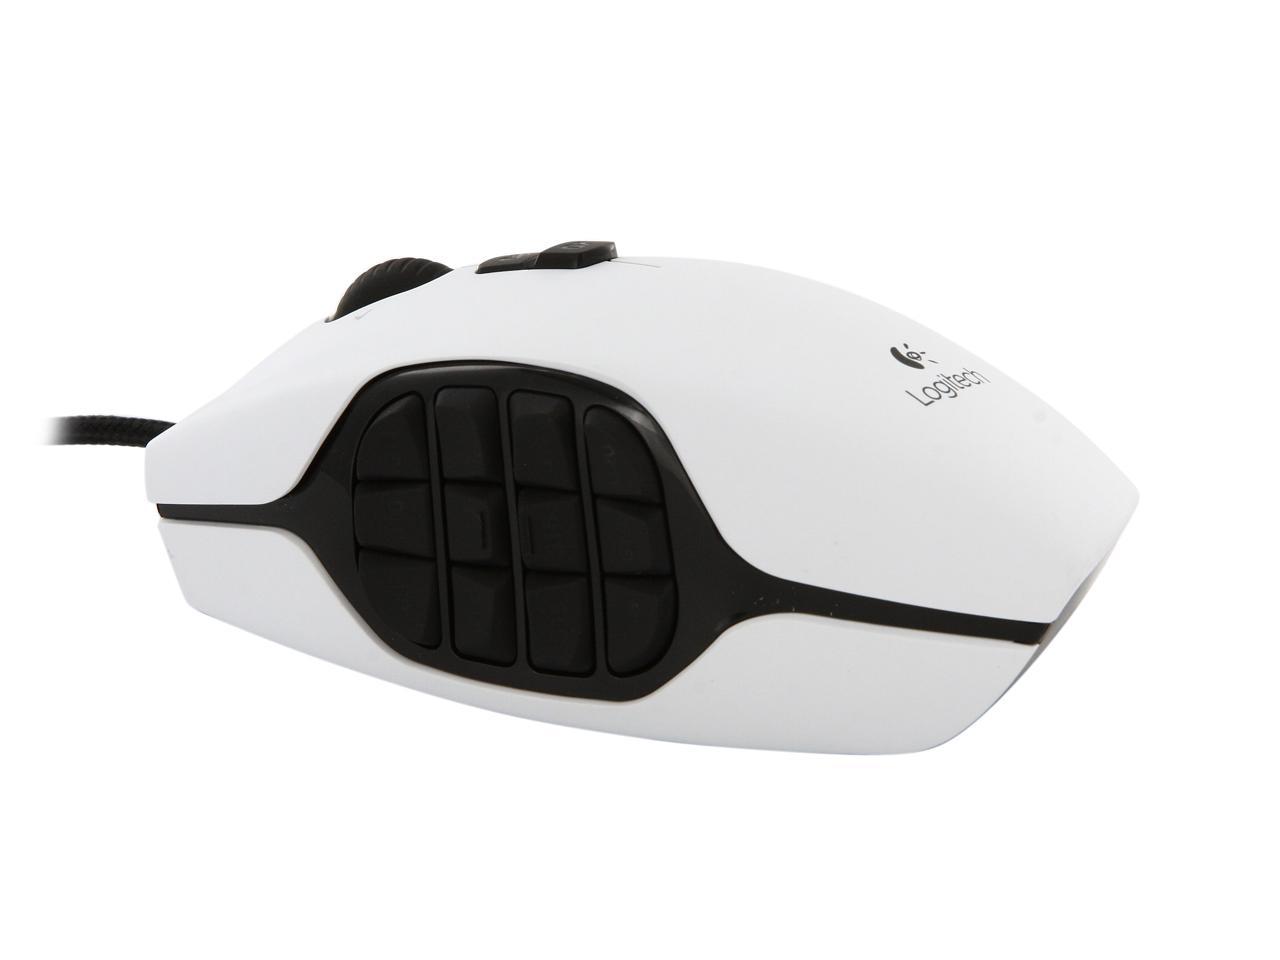 Used Like New Logitech G600mmo Gaming Mouse White Newegg Com